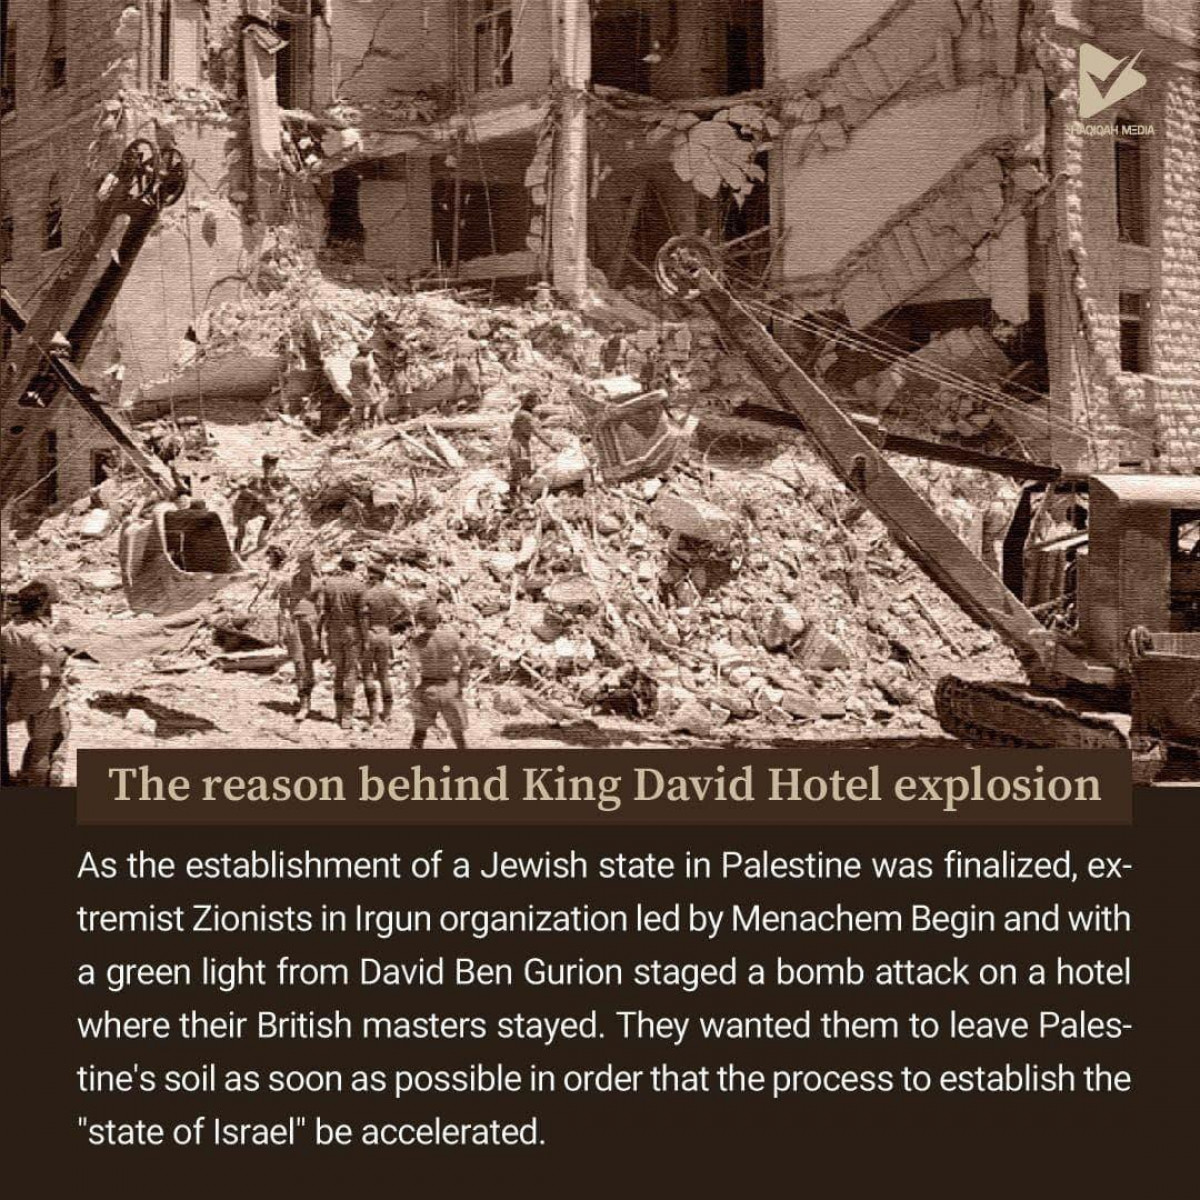 The reason behind King David Hotel explosion